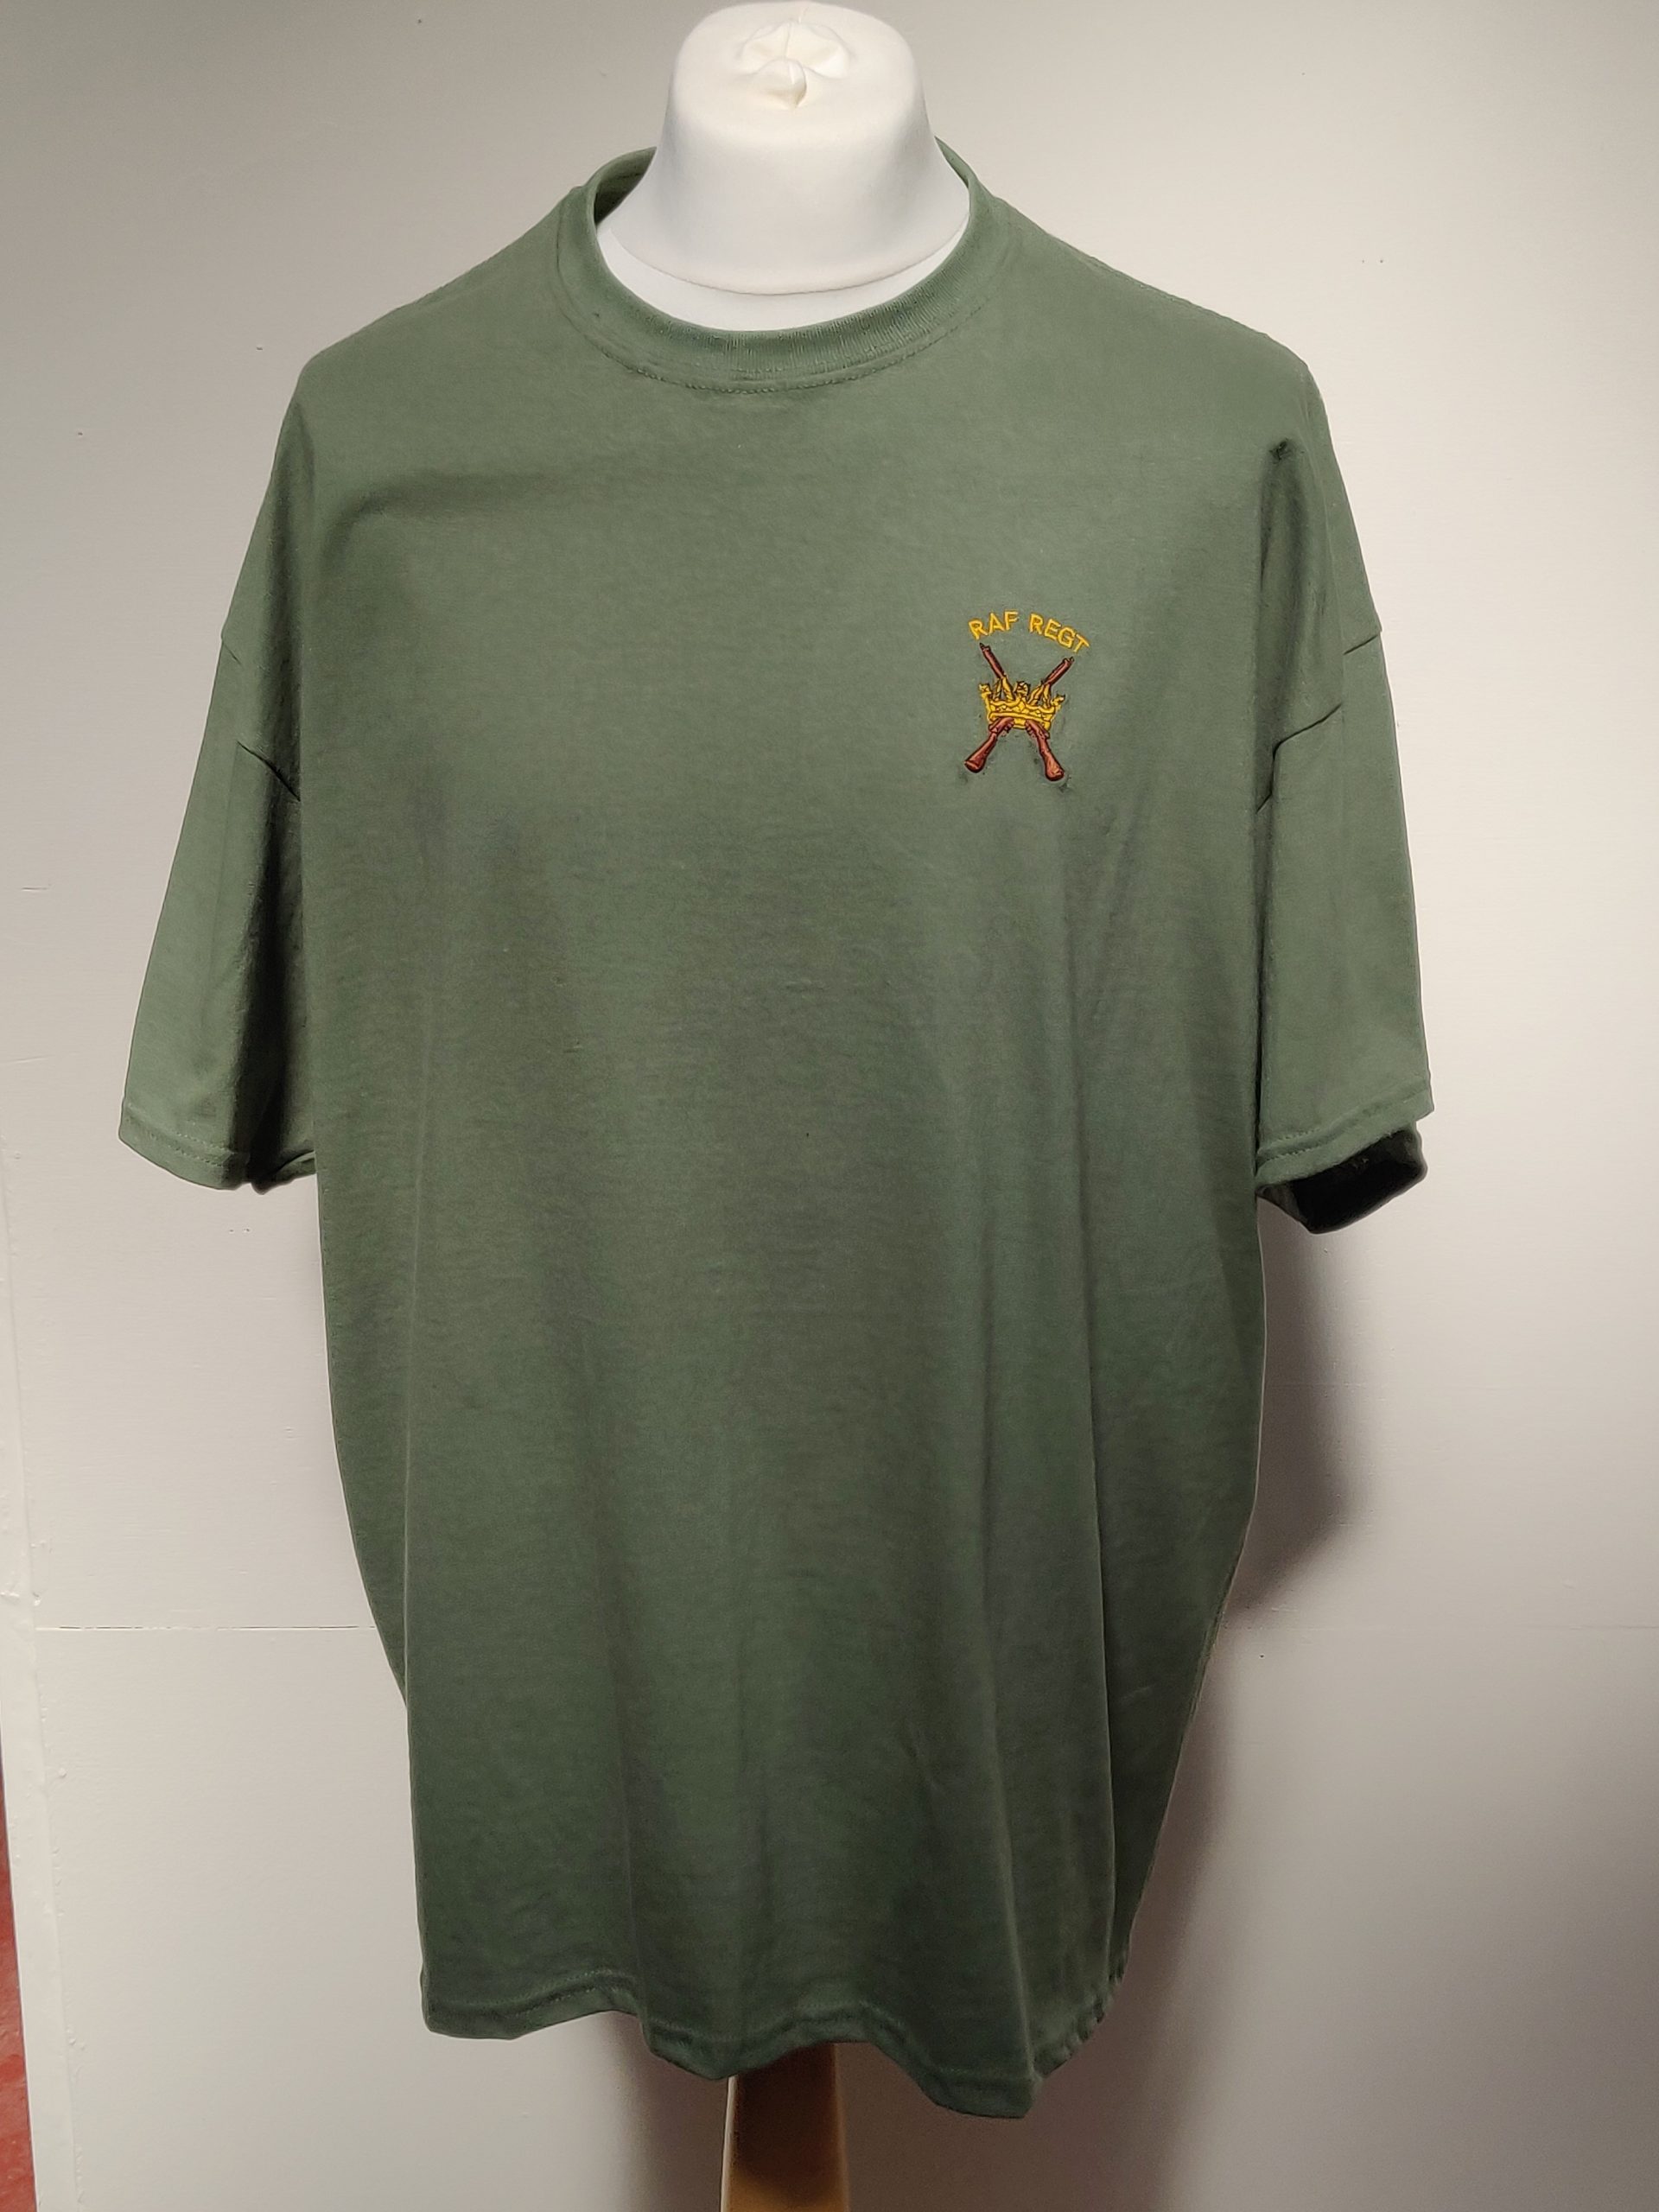 RAF Regiment T-Shirt Green - RAF Regiment Heritage